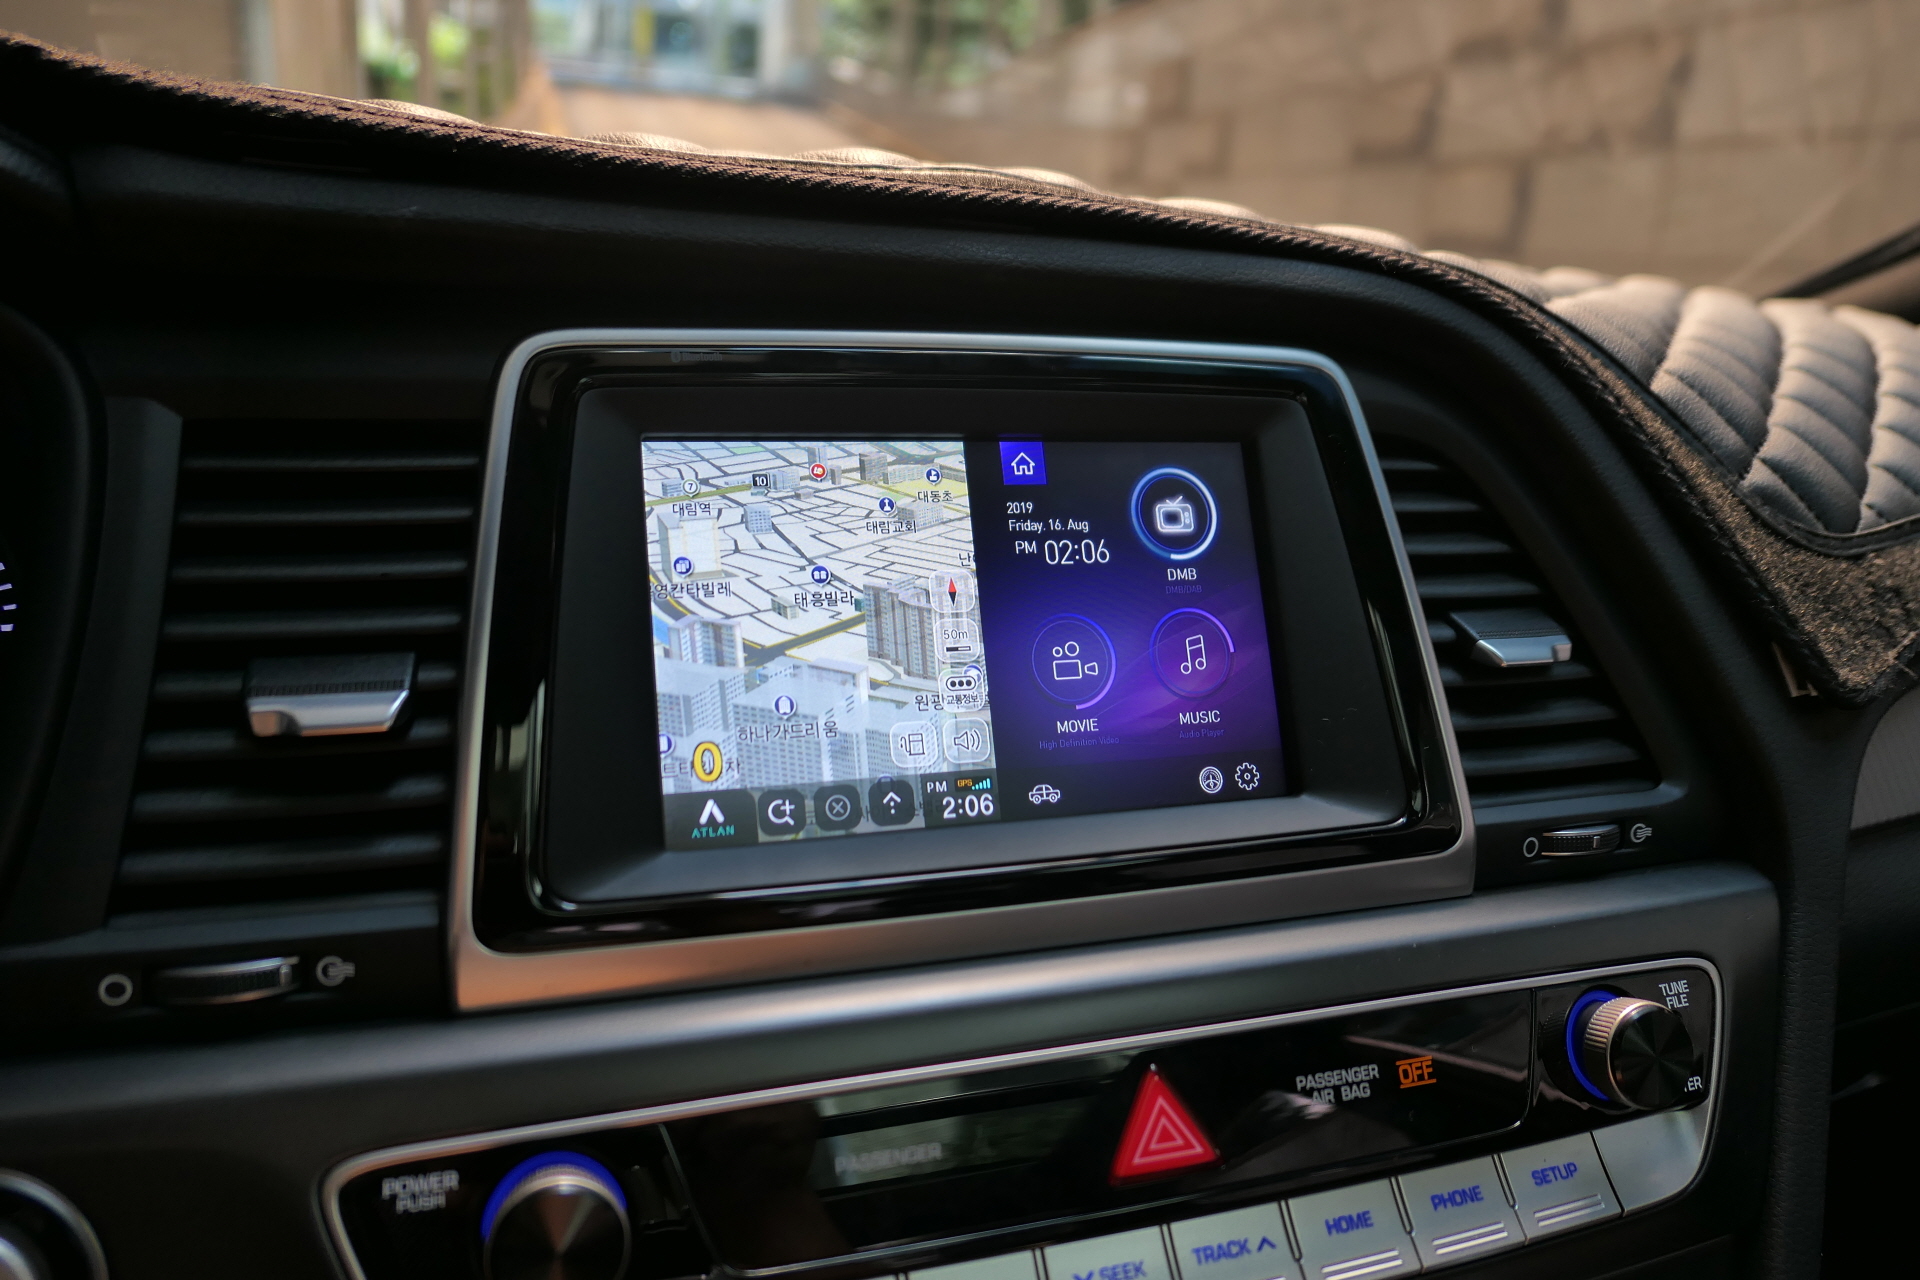 IW-N-NR with N-LINK II GPS FOR Hyundai sonata new rise